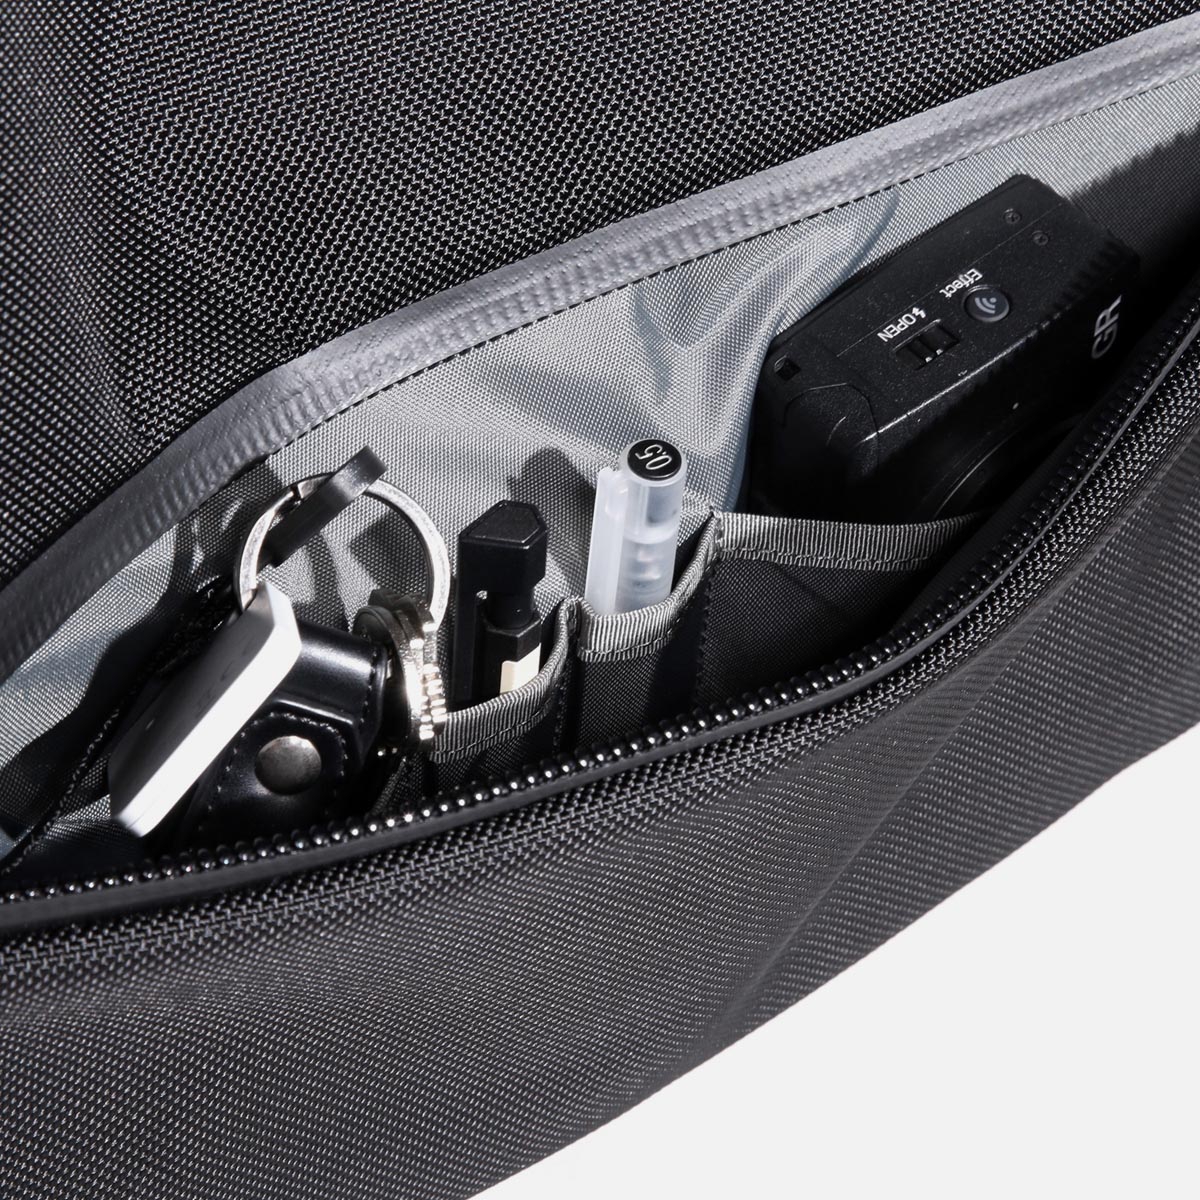 Travel Sling - Black — Aer | Modern gym bags, travel backpacks and ...